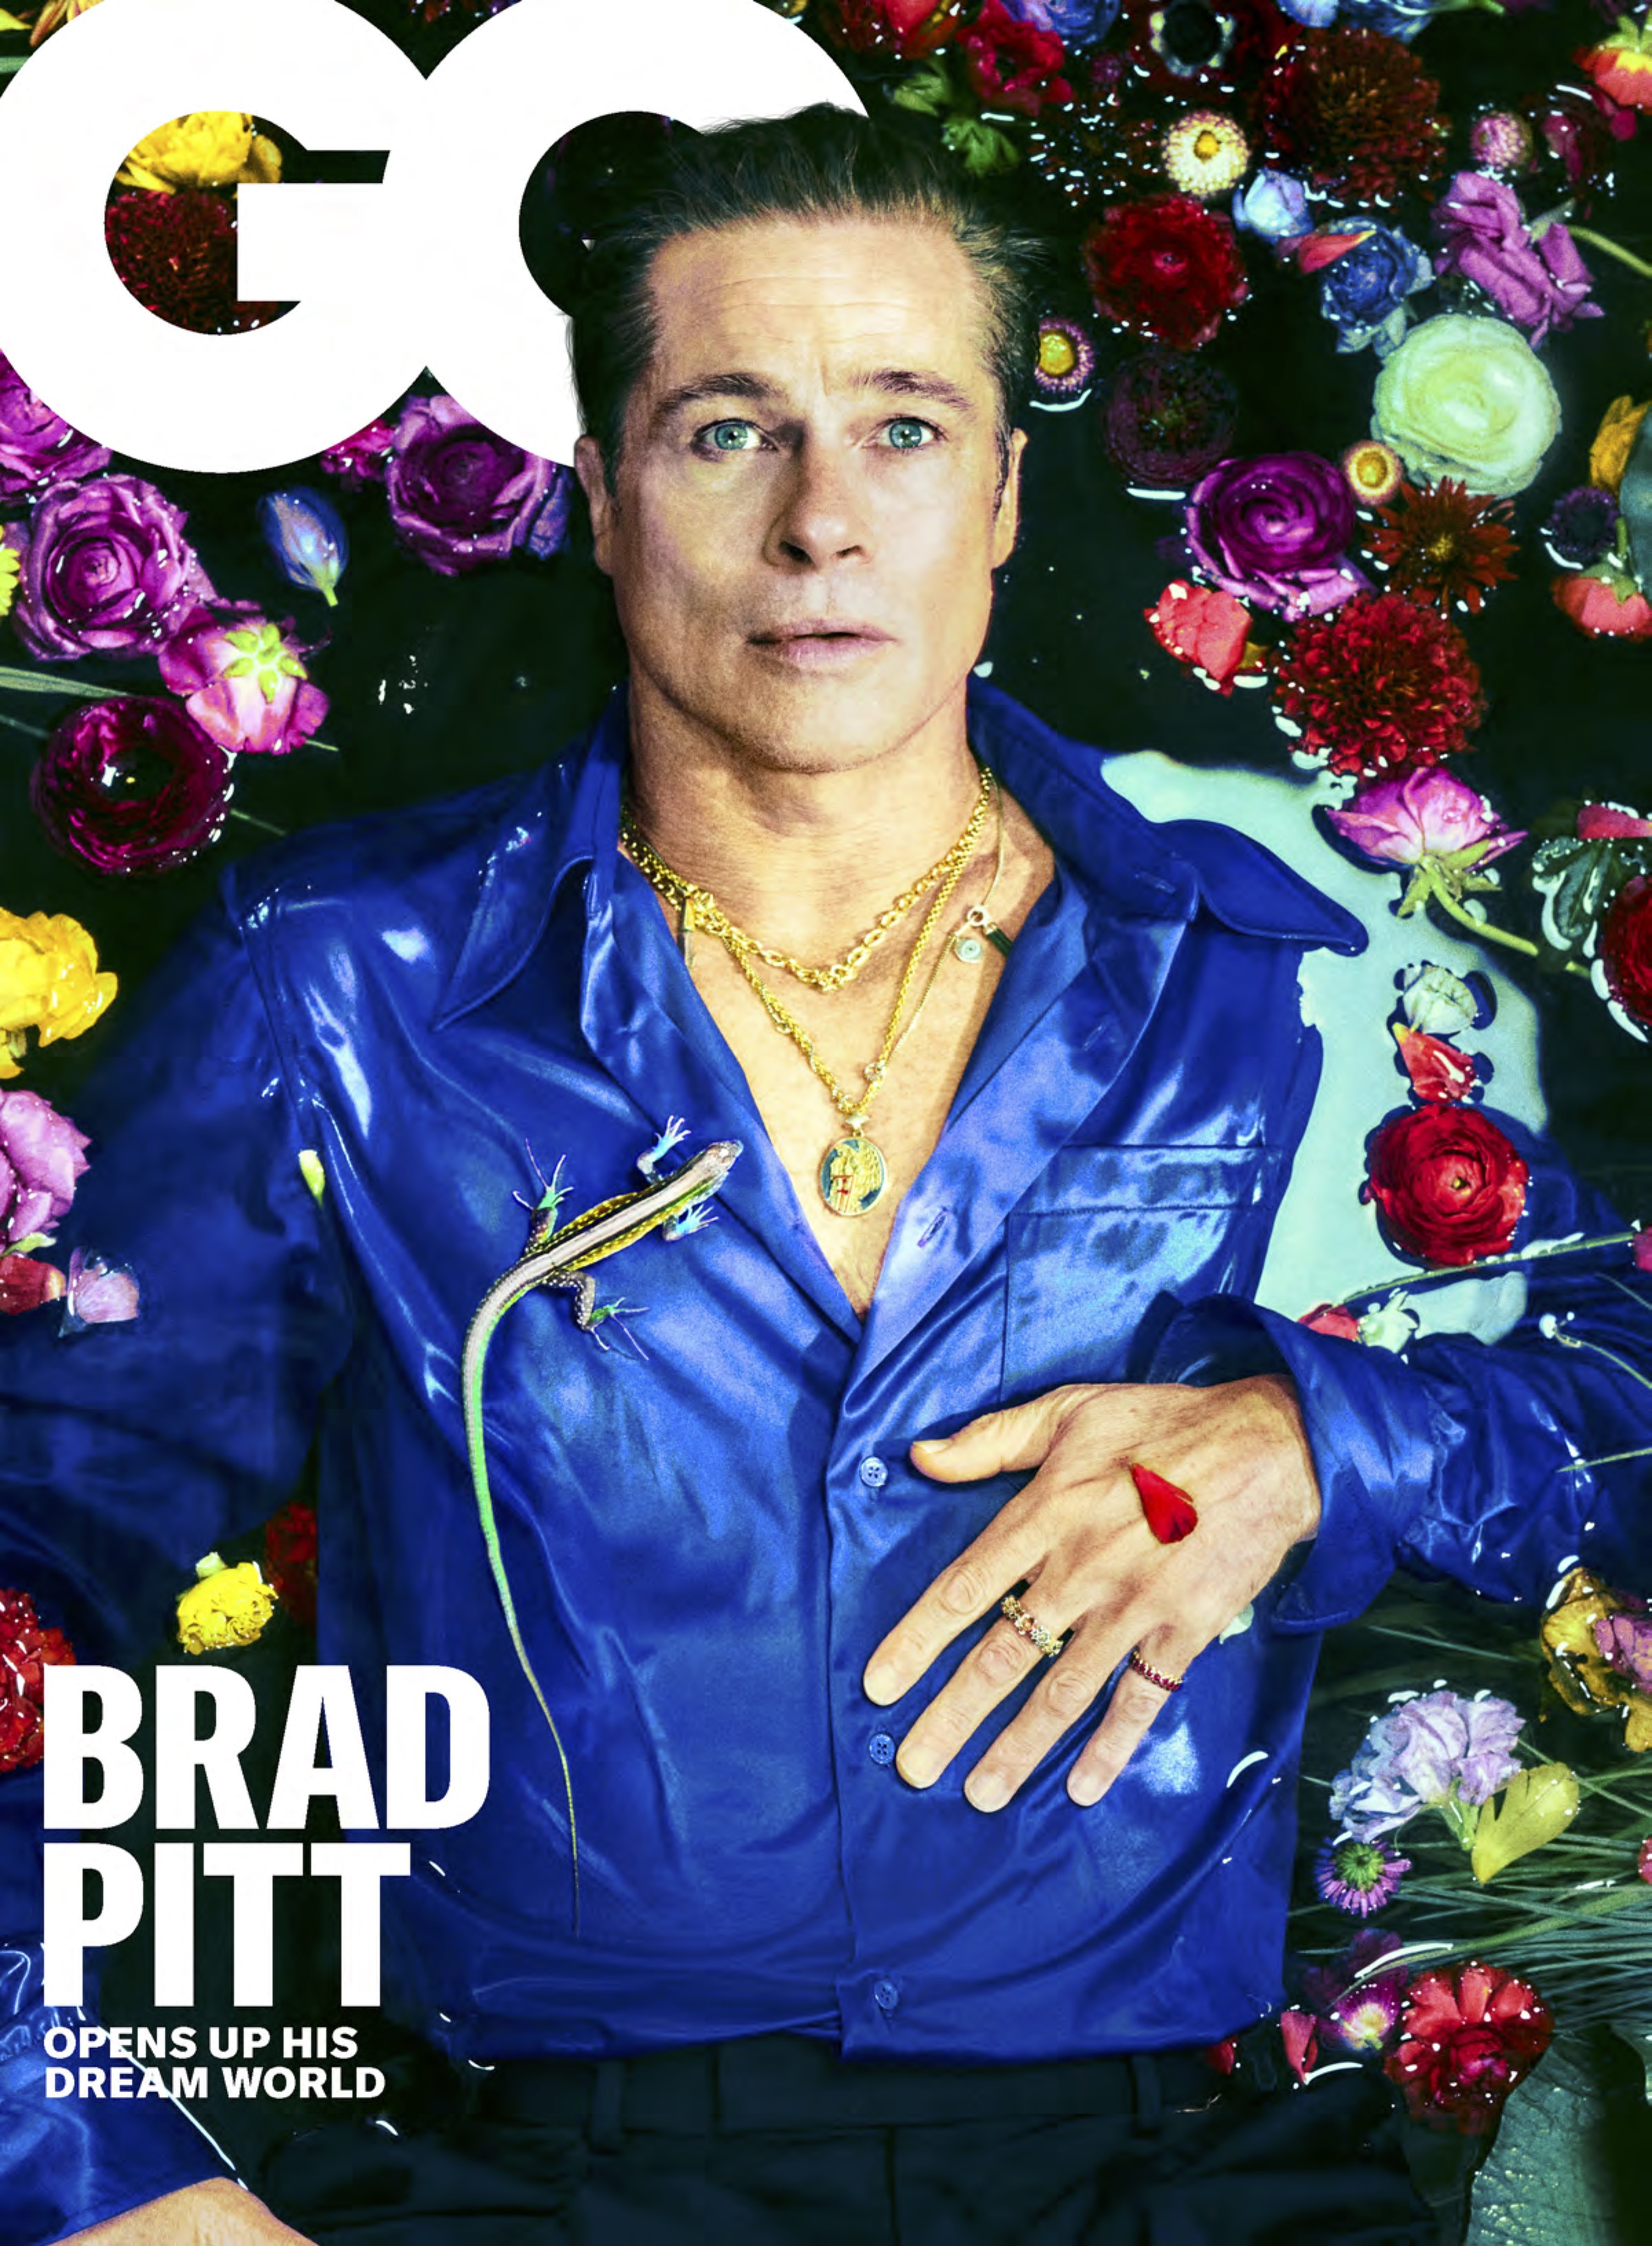 GQ - “Brad Pitt Opens Up His Dream World” August 2022